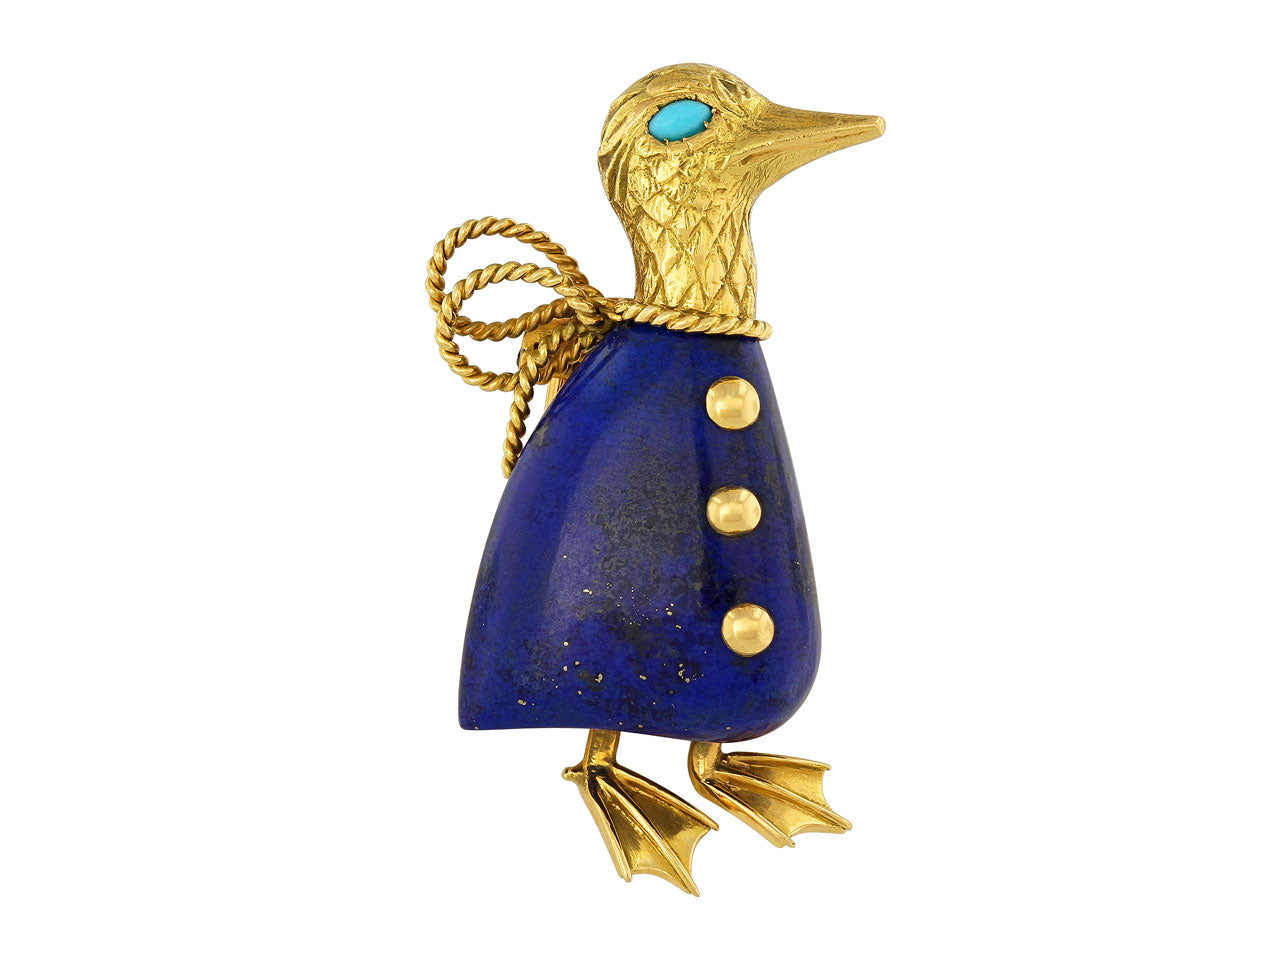 Vintage Textured Duck Brooch Pin w/ Ruby 18K/ 14K Gold